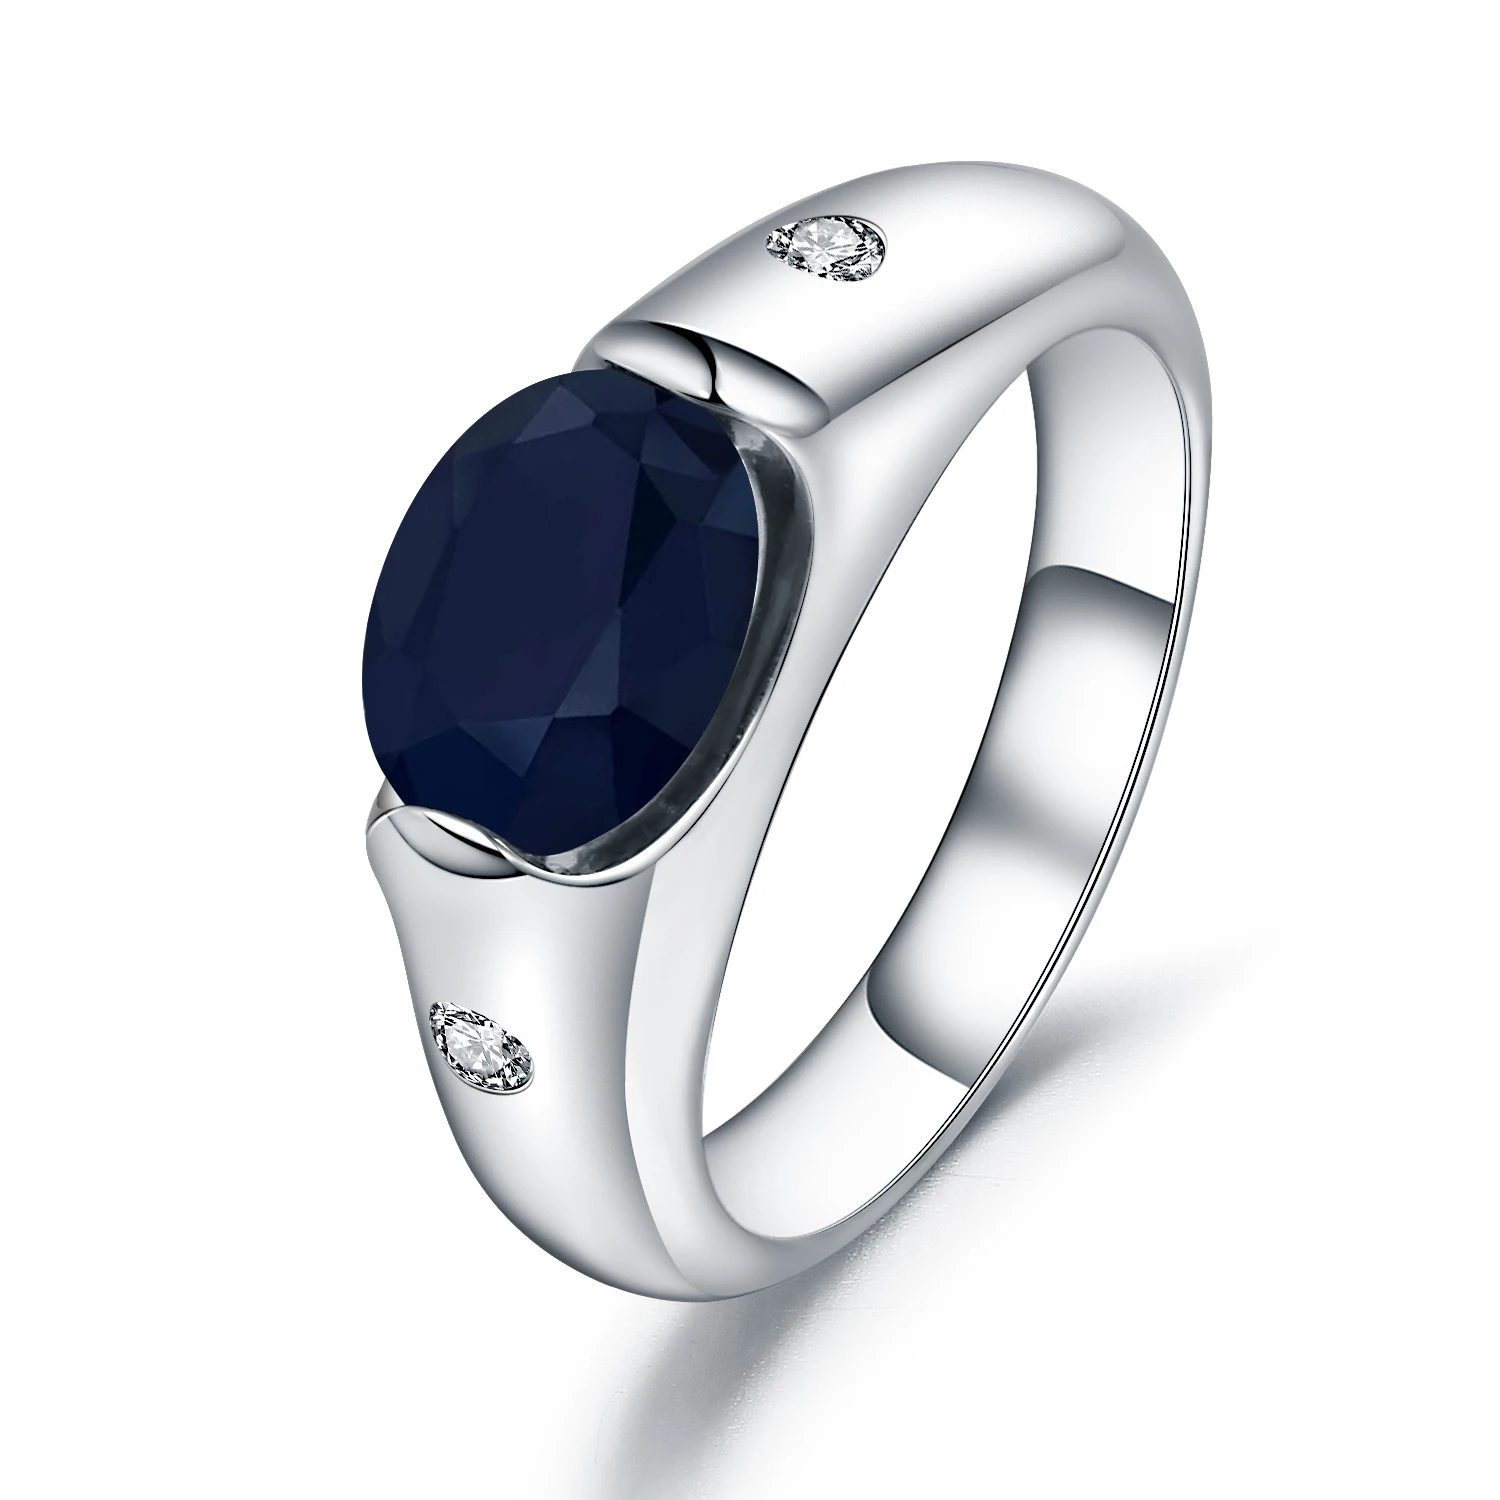 RICA FELIZ Fine Jewelry 925 Sterling Silver Birthstone Ring For Women 7*9mm Natural Red Garnet Wedding Engagement Rings RicaFeliz • 2022